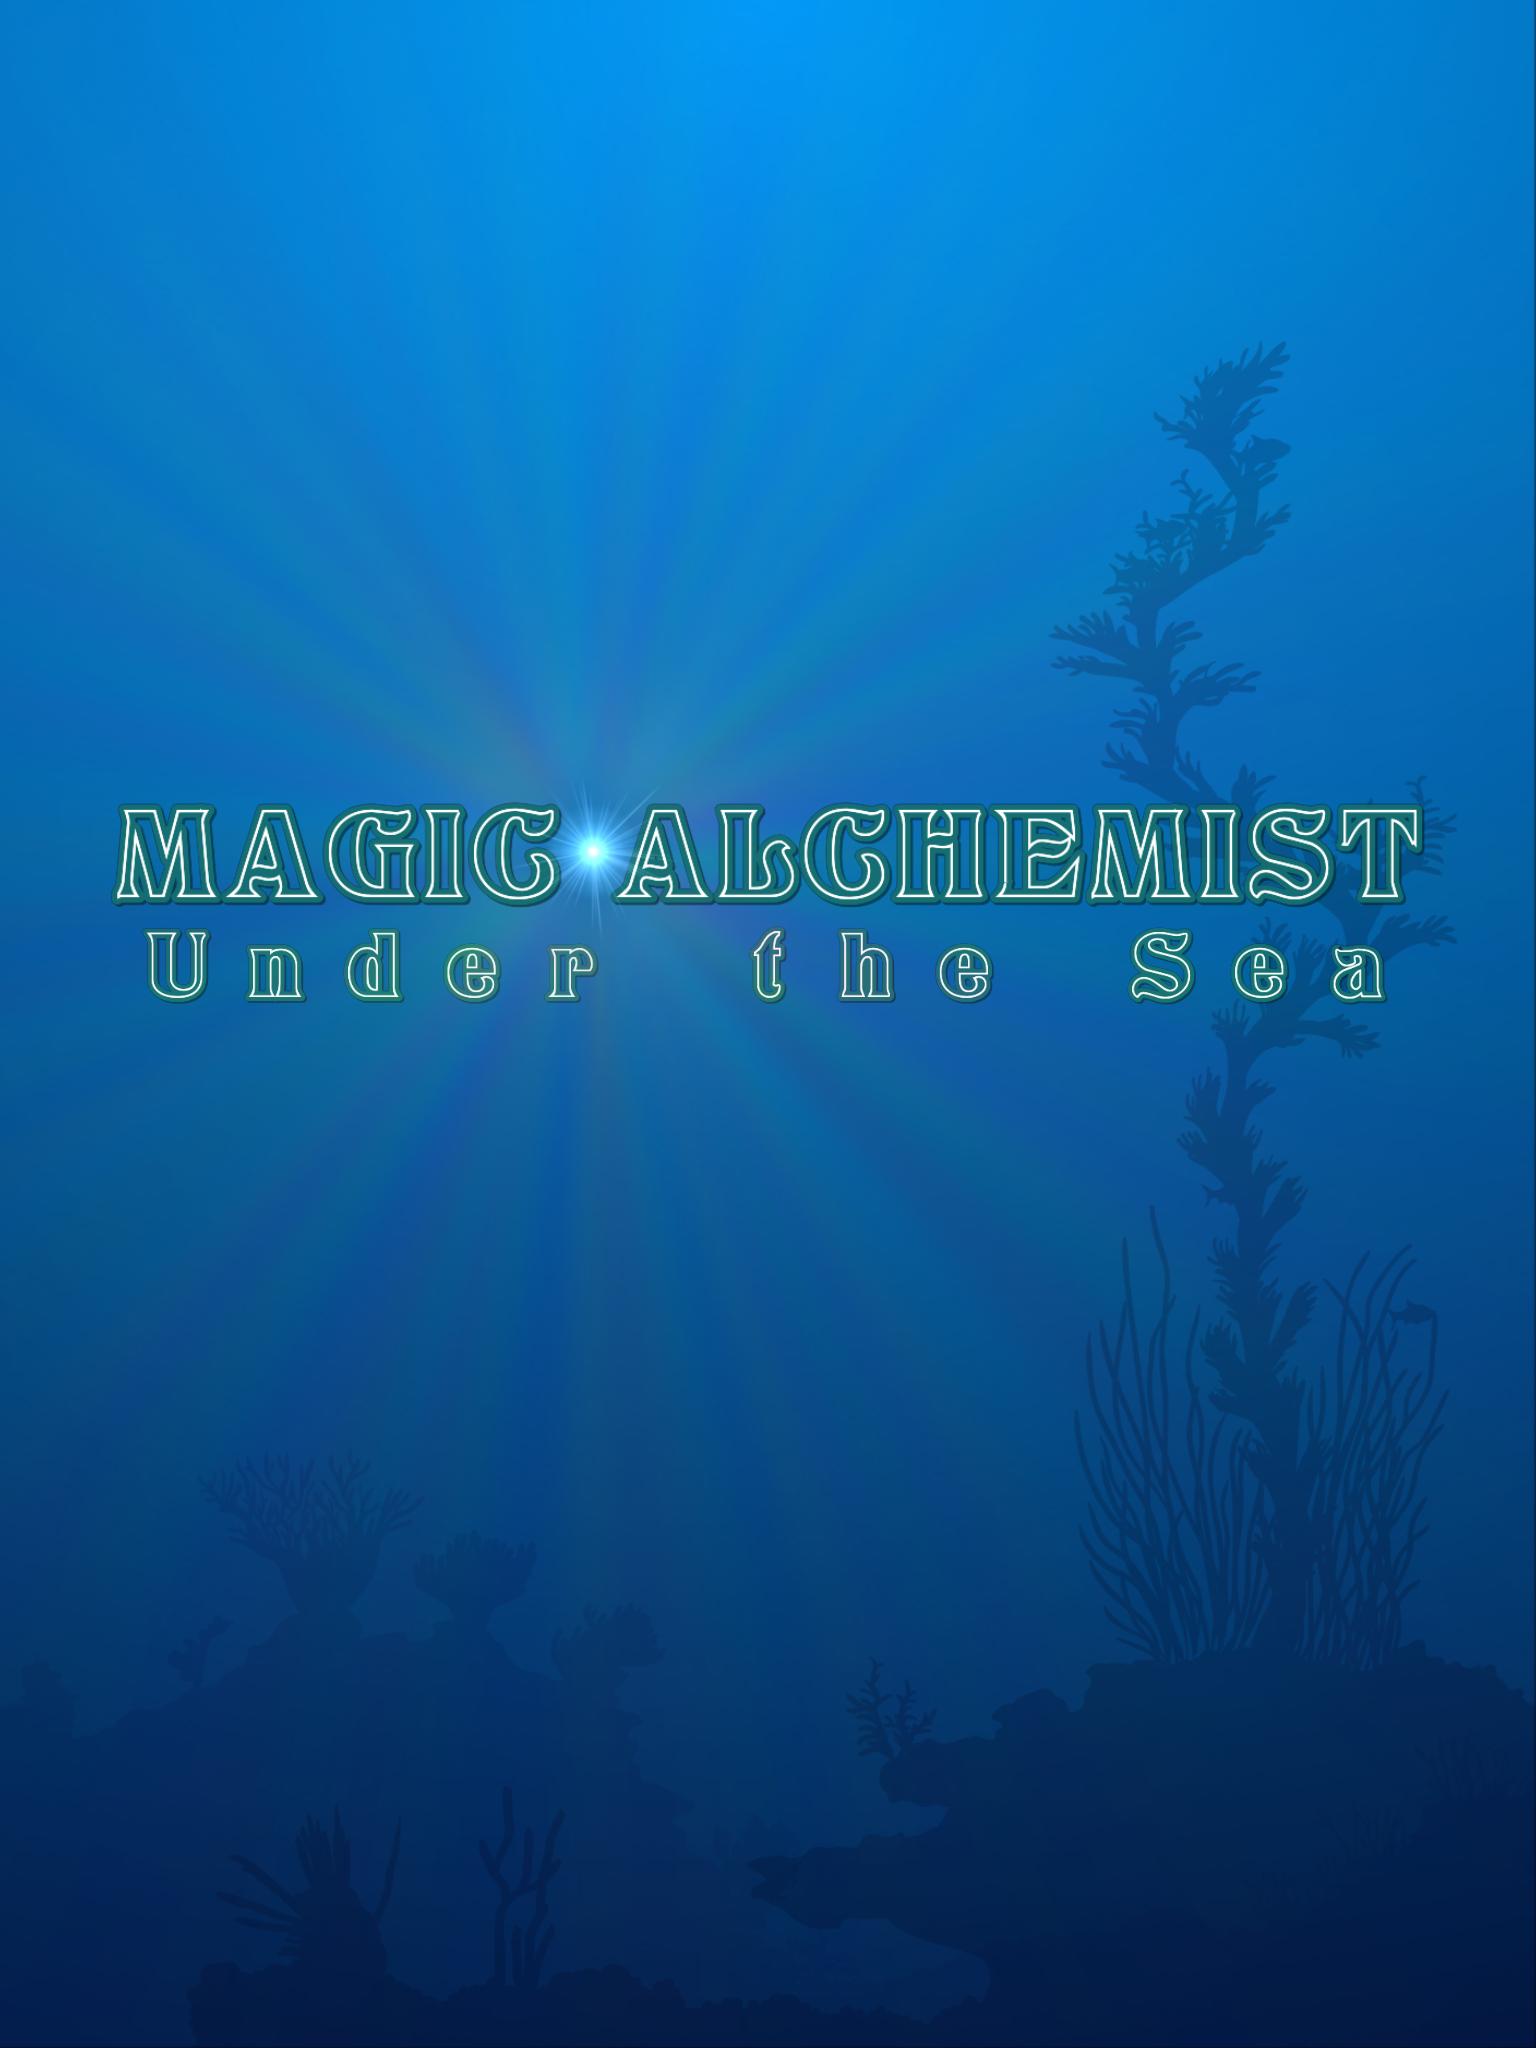 Magic Alchemist Under the Sea 2.01 Screenshot 8